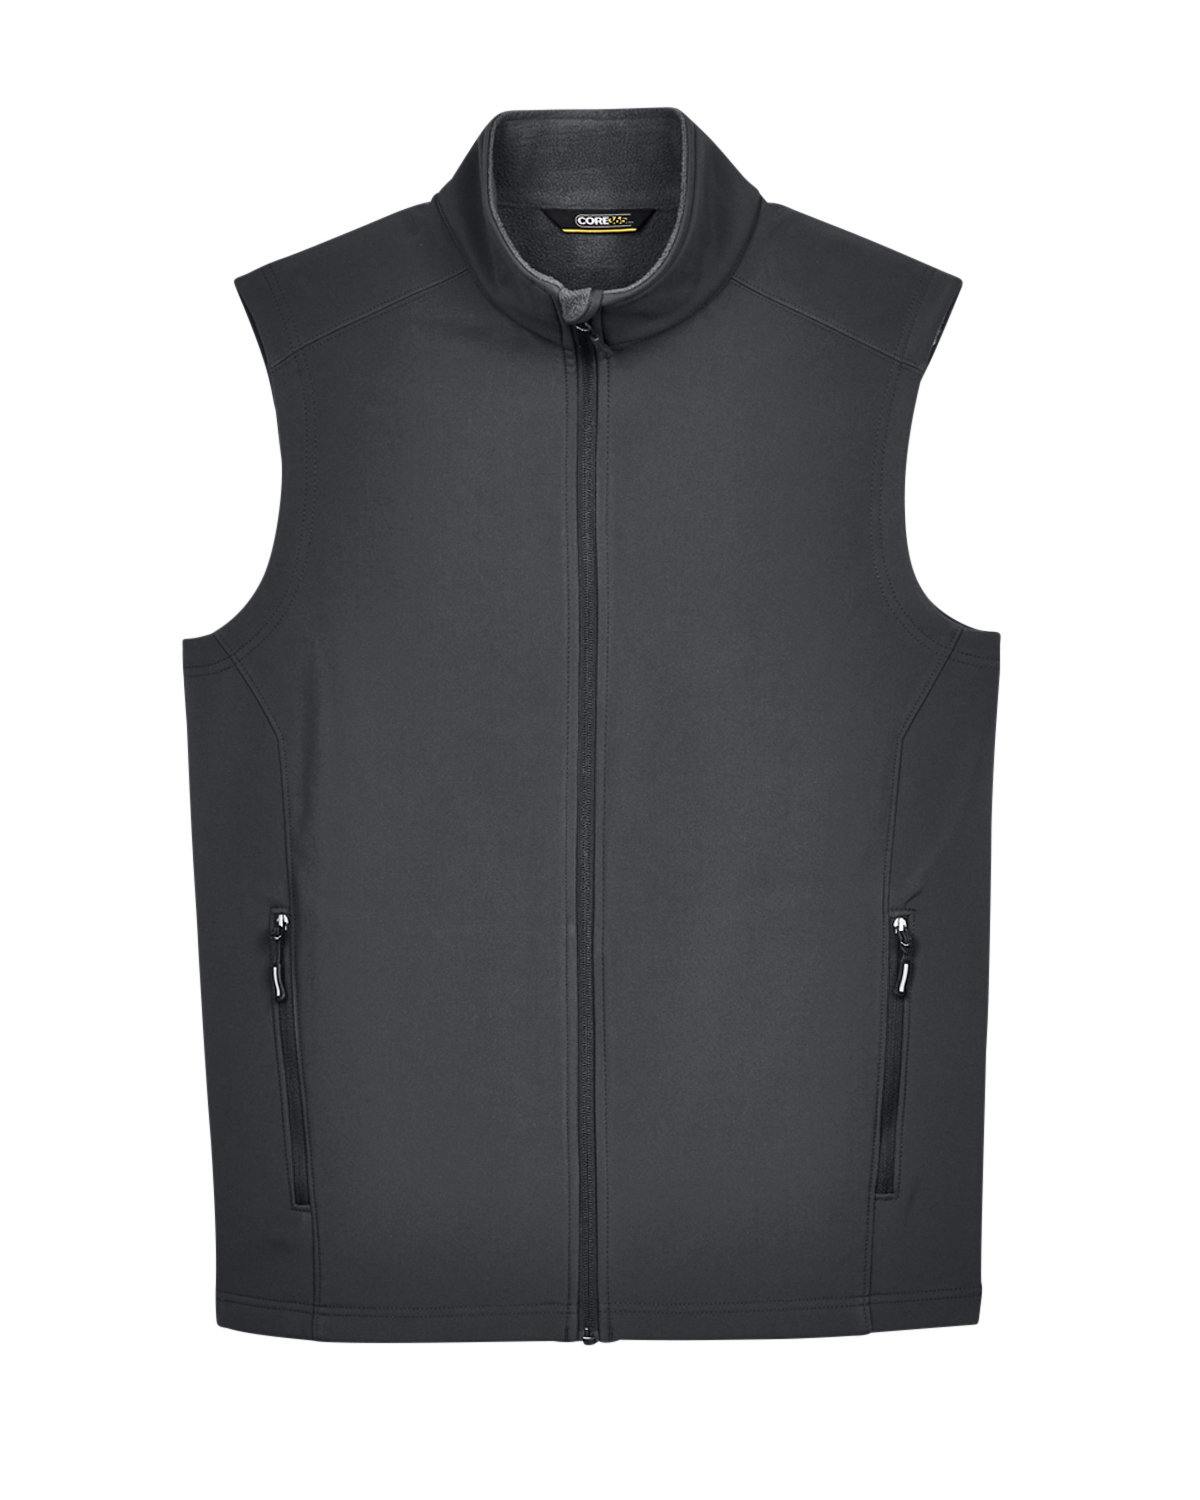 Image for Men's Cruise Two-Layer Fleece Bonded Soft Shell Vest